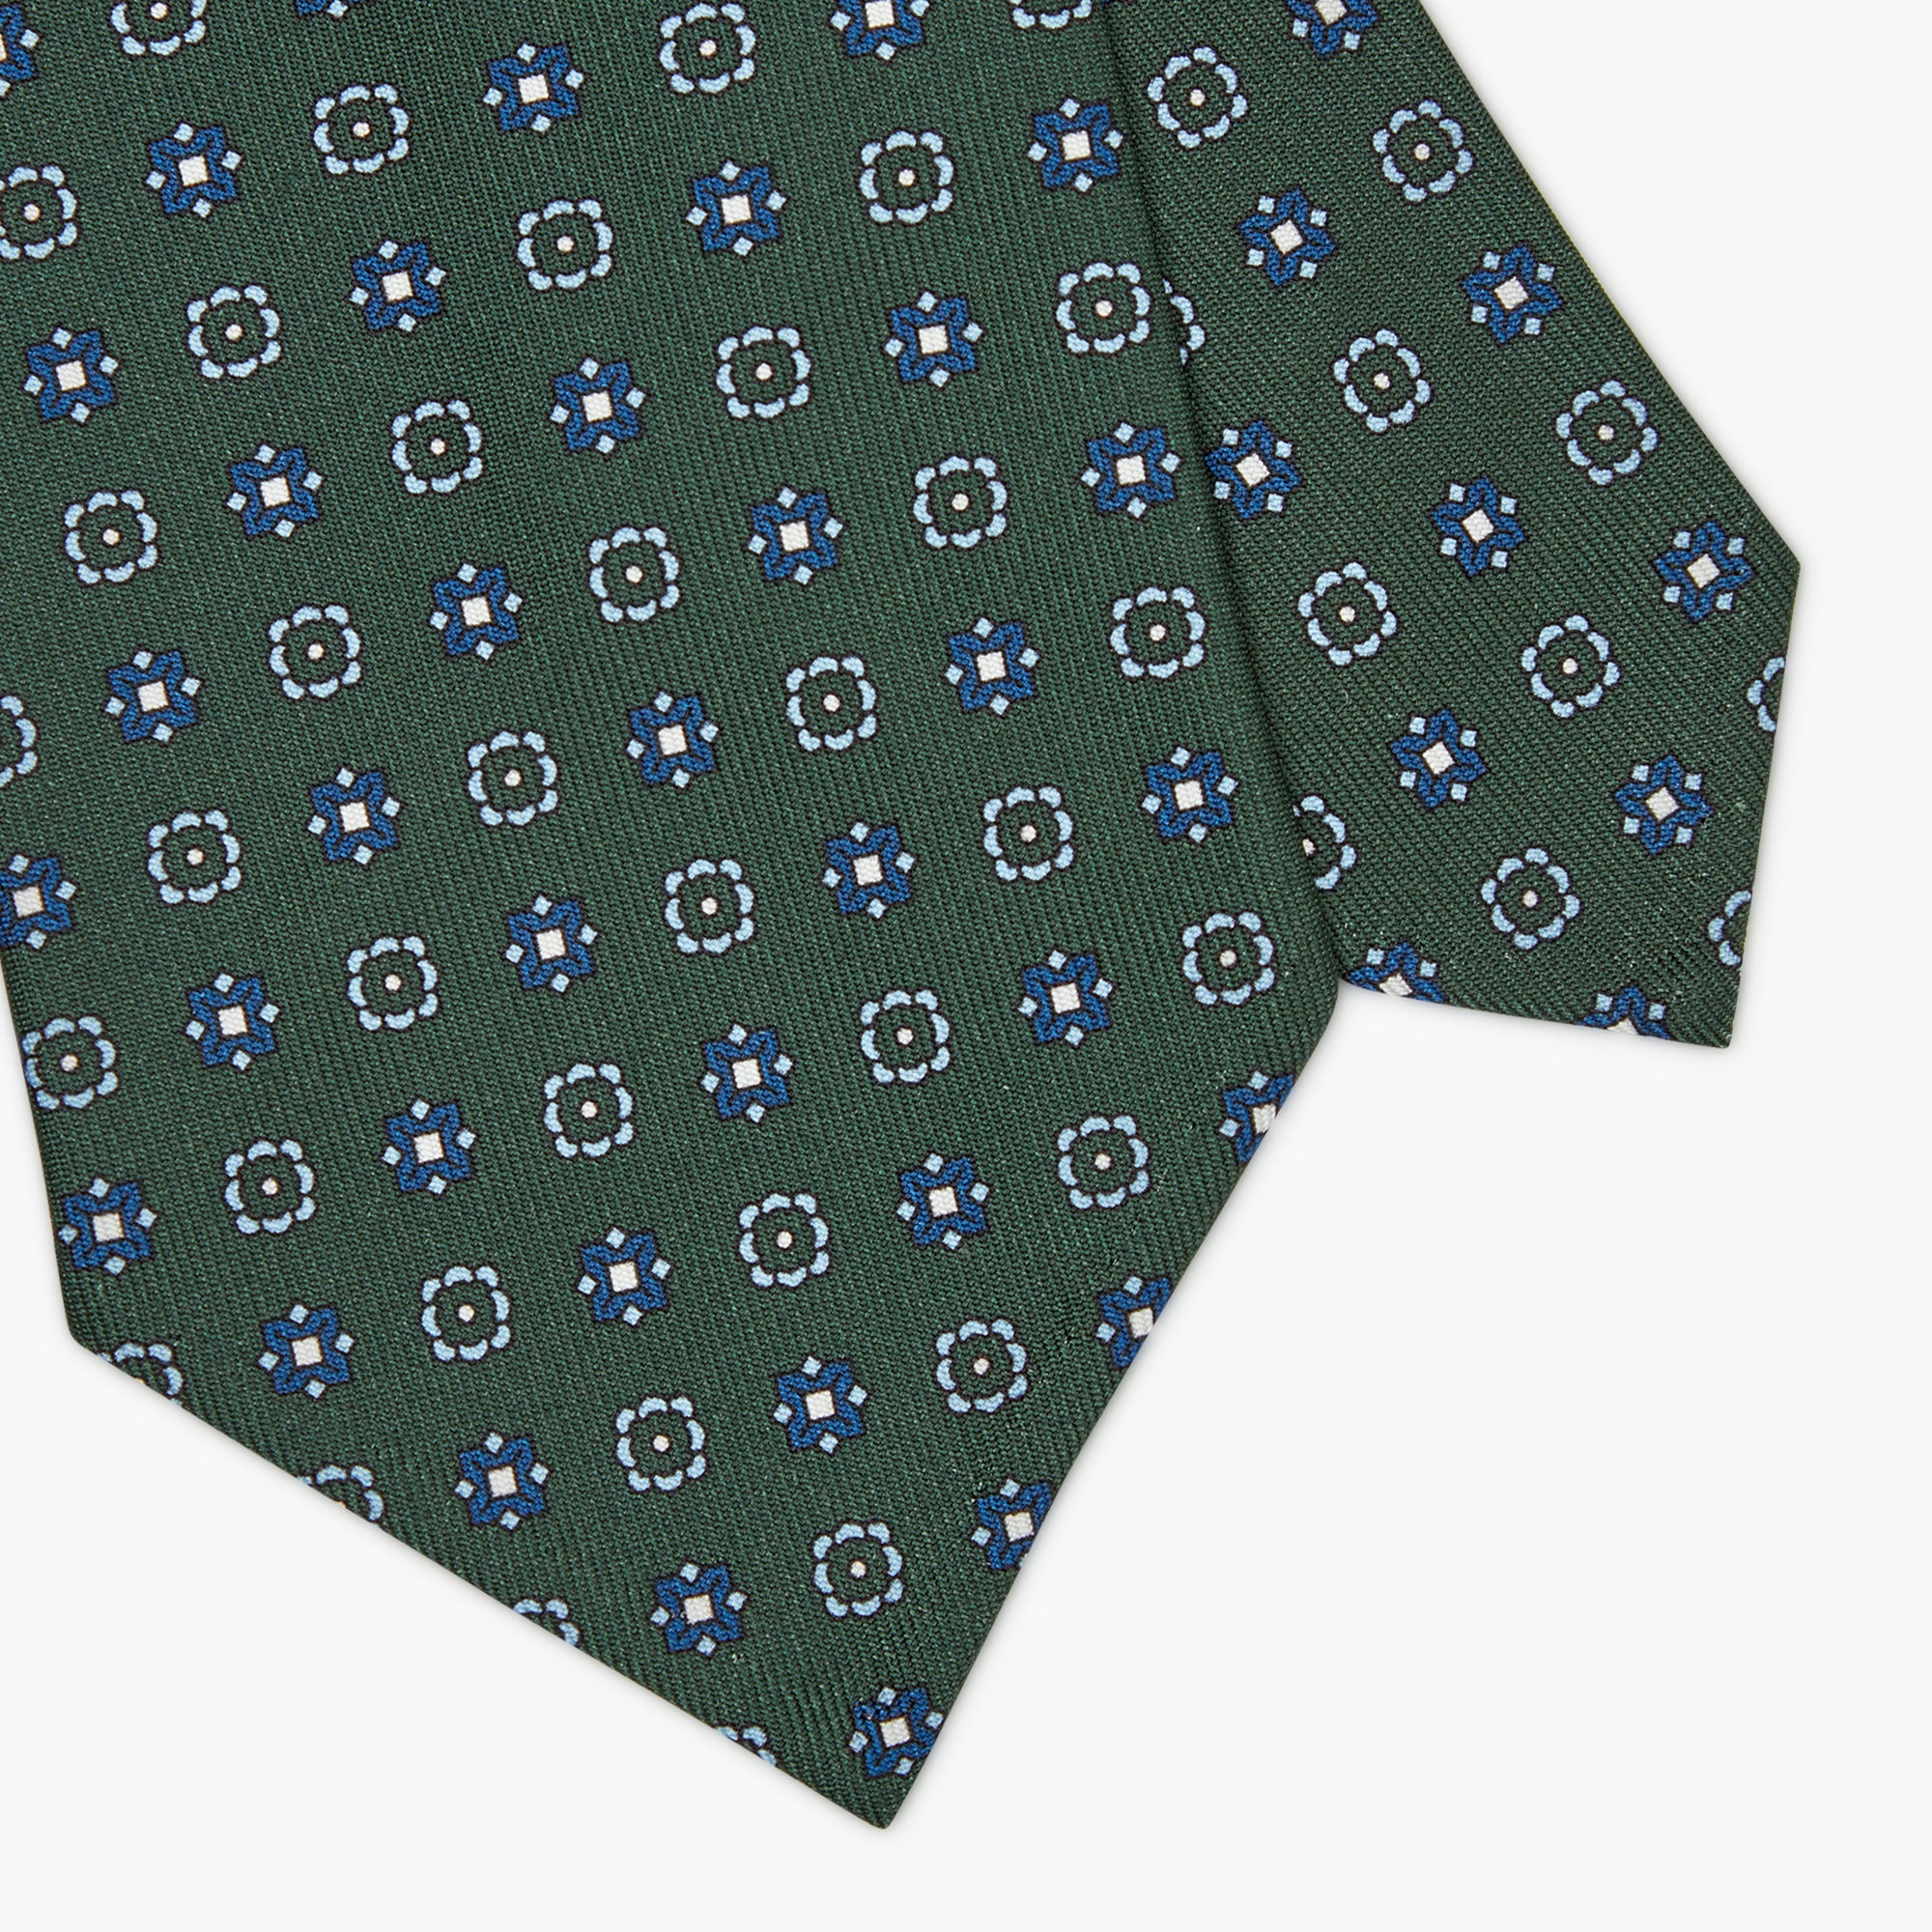 3-Fold Floral Printed English Silk Tie - Green Blue